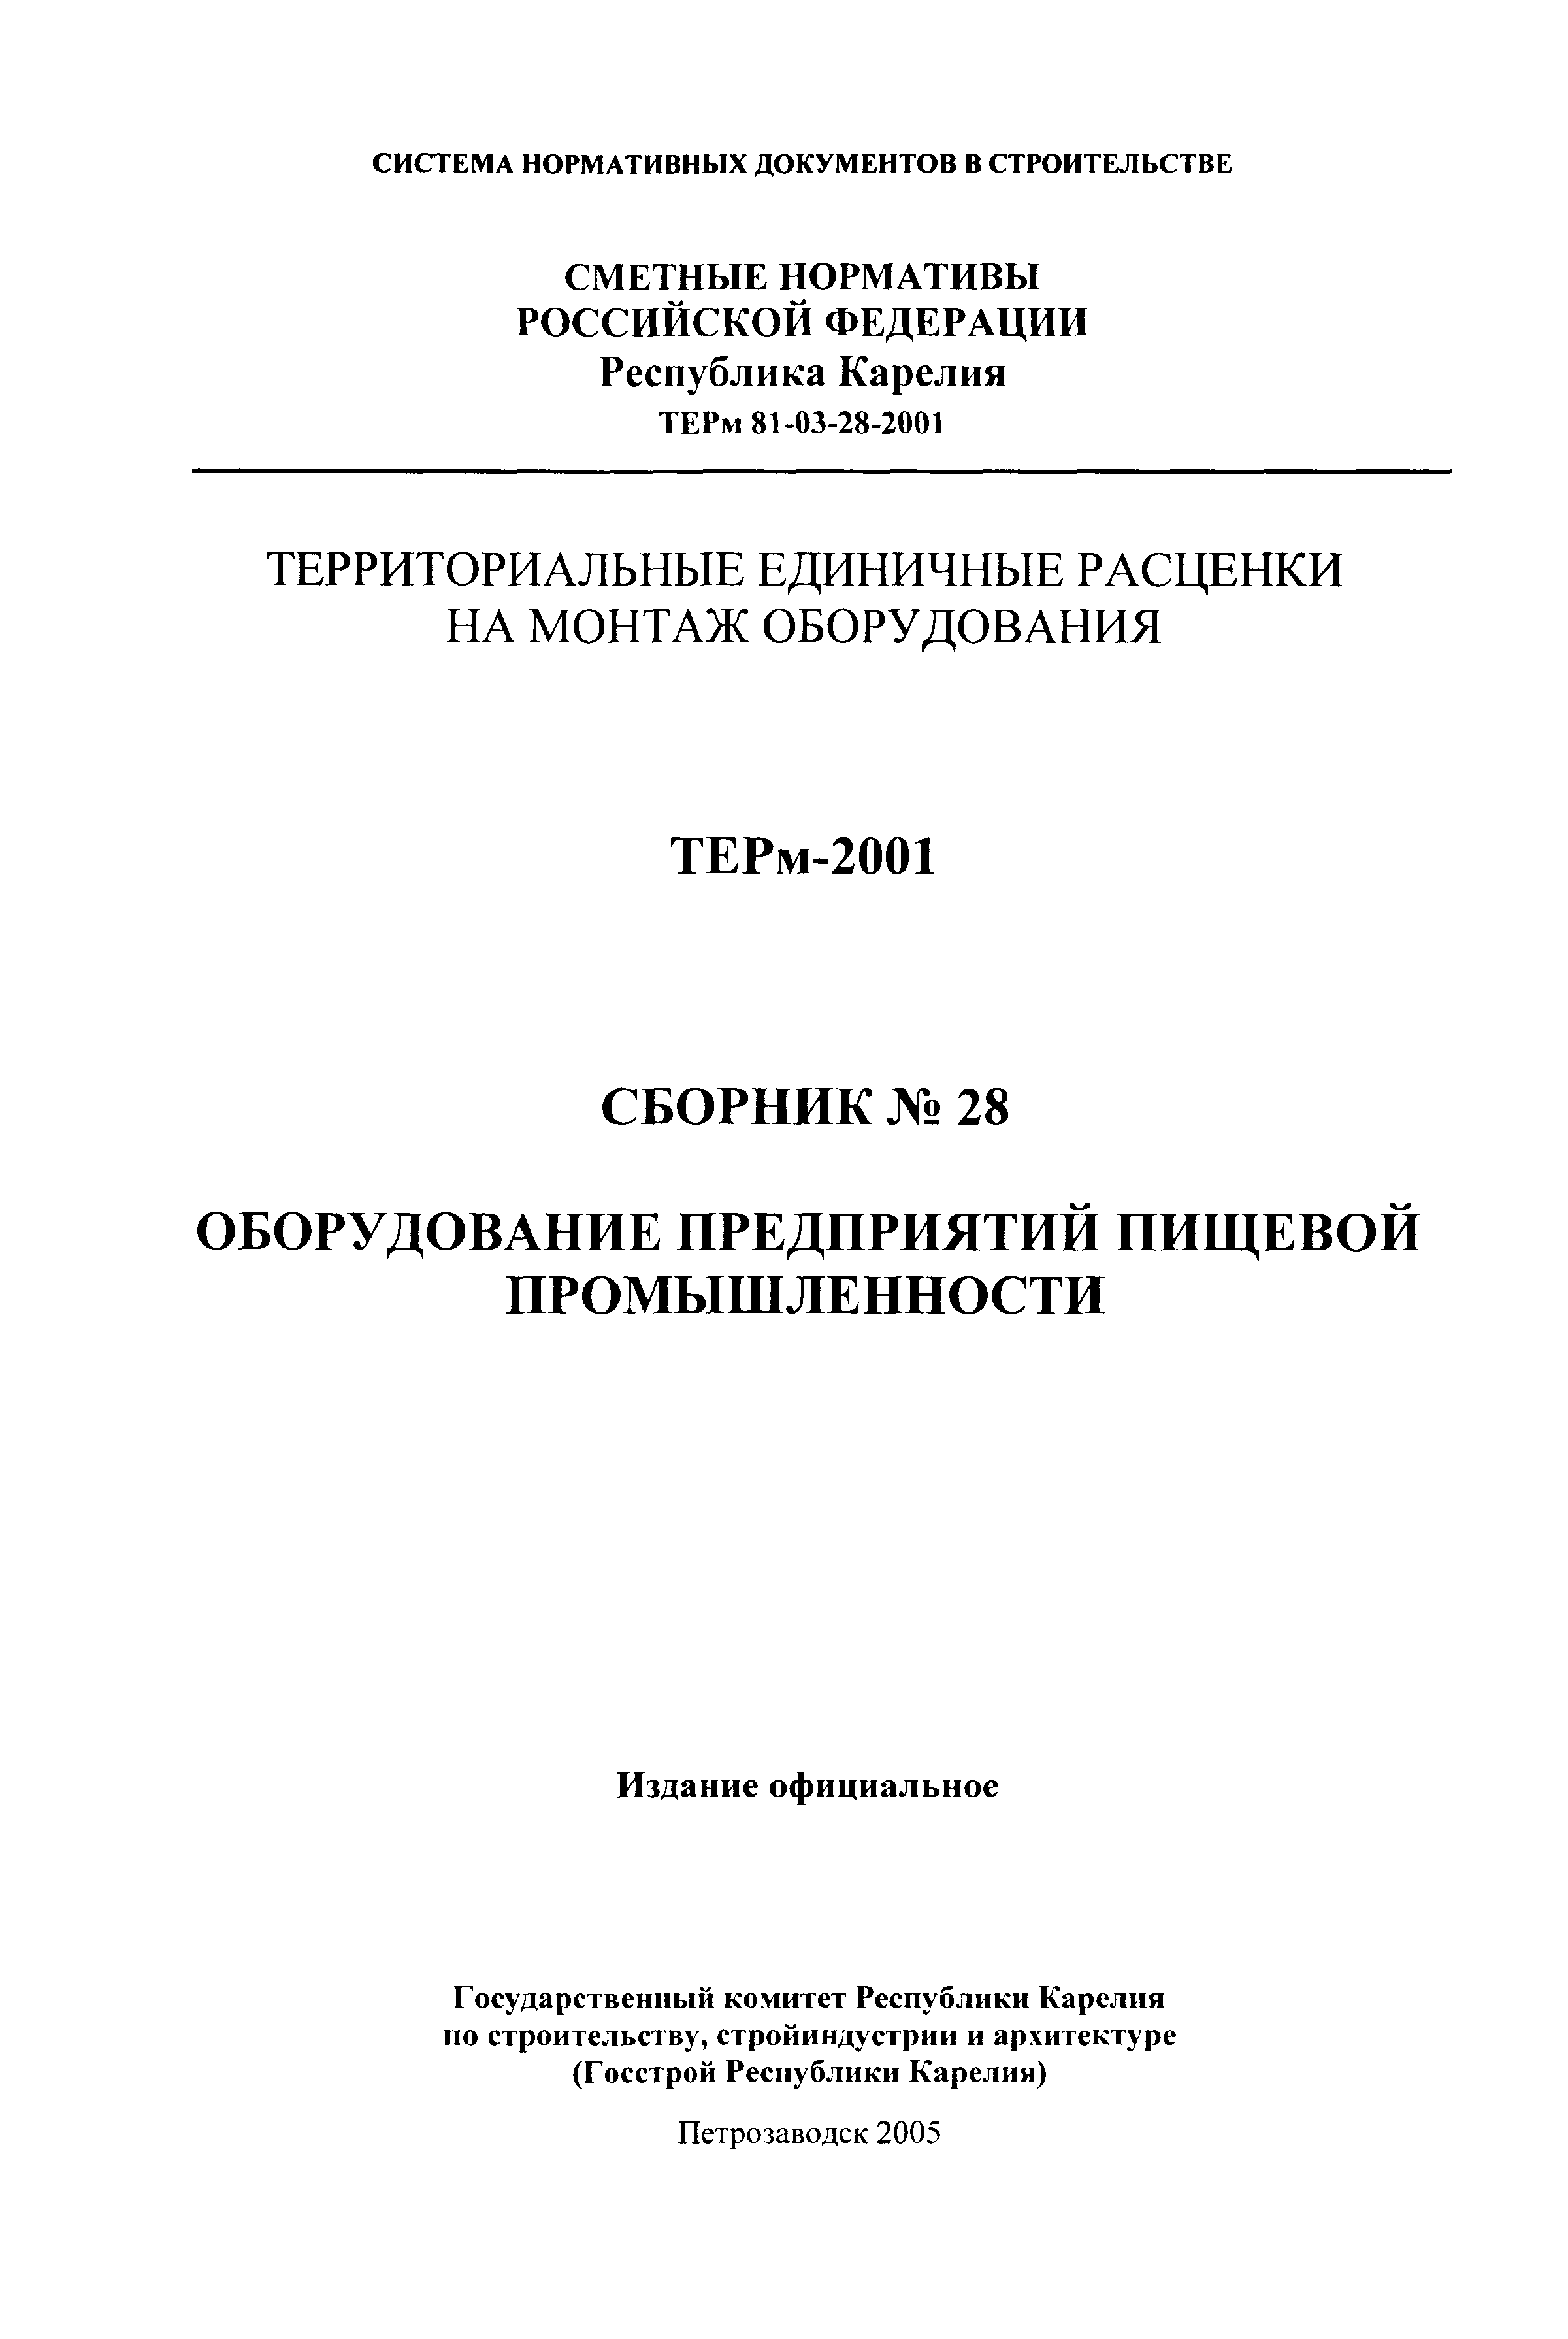 ТЕРм Республика Карелия 2001-28